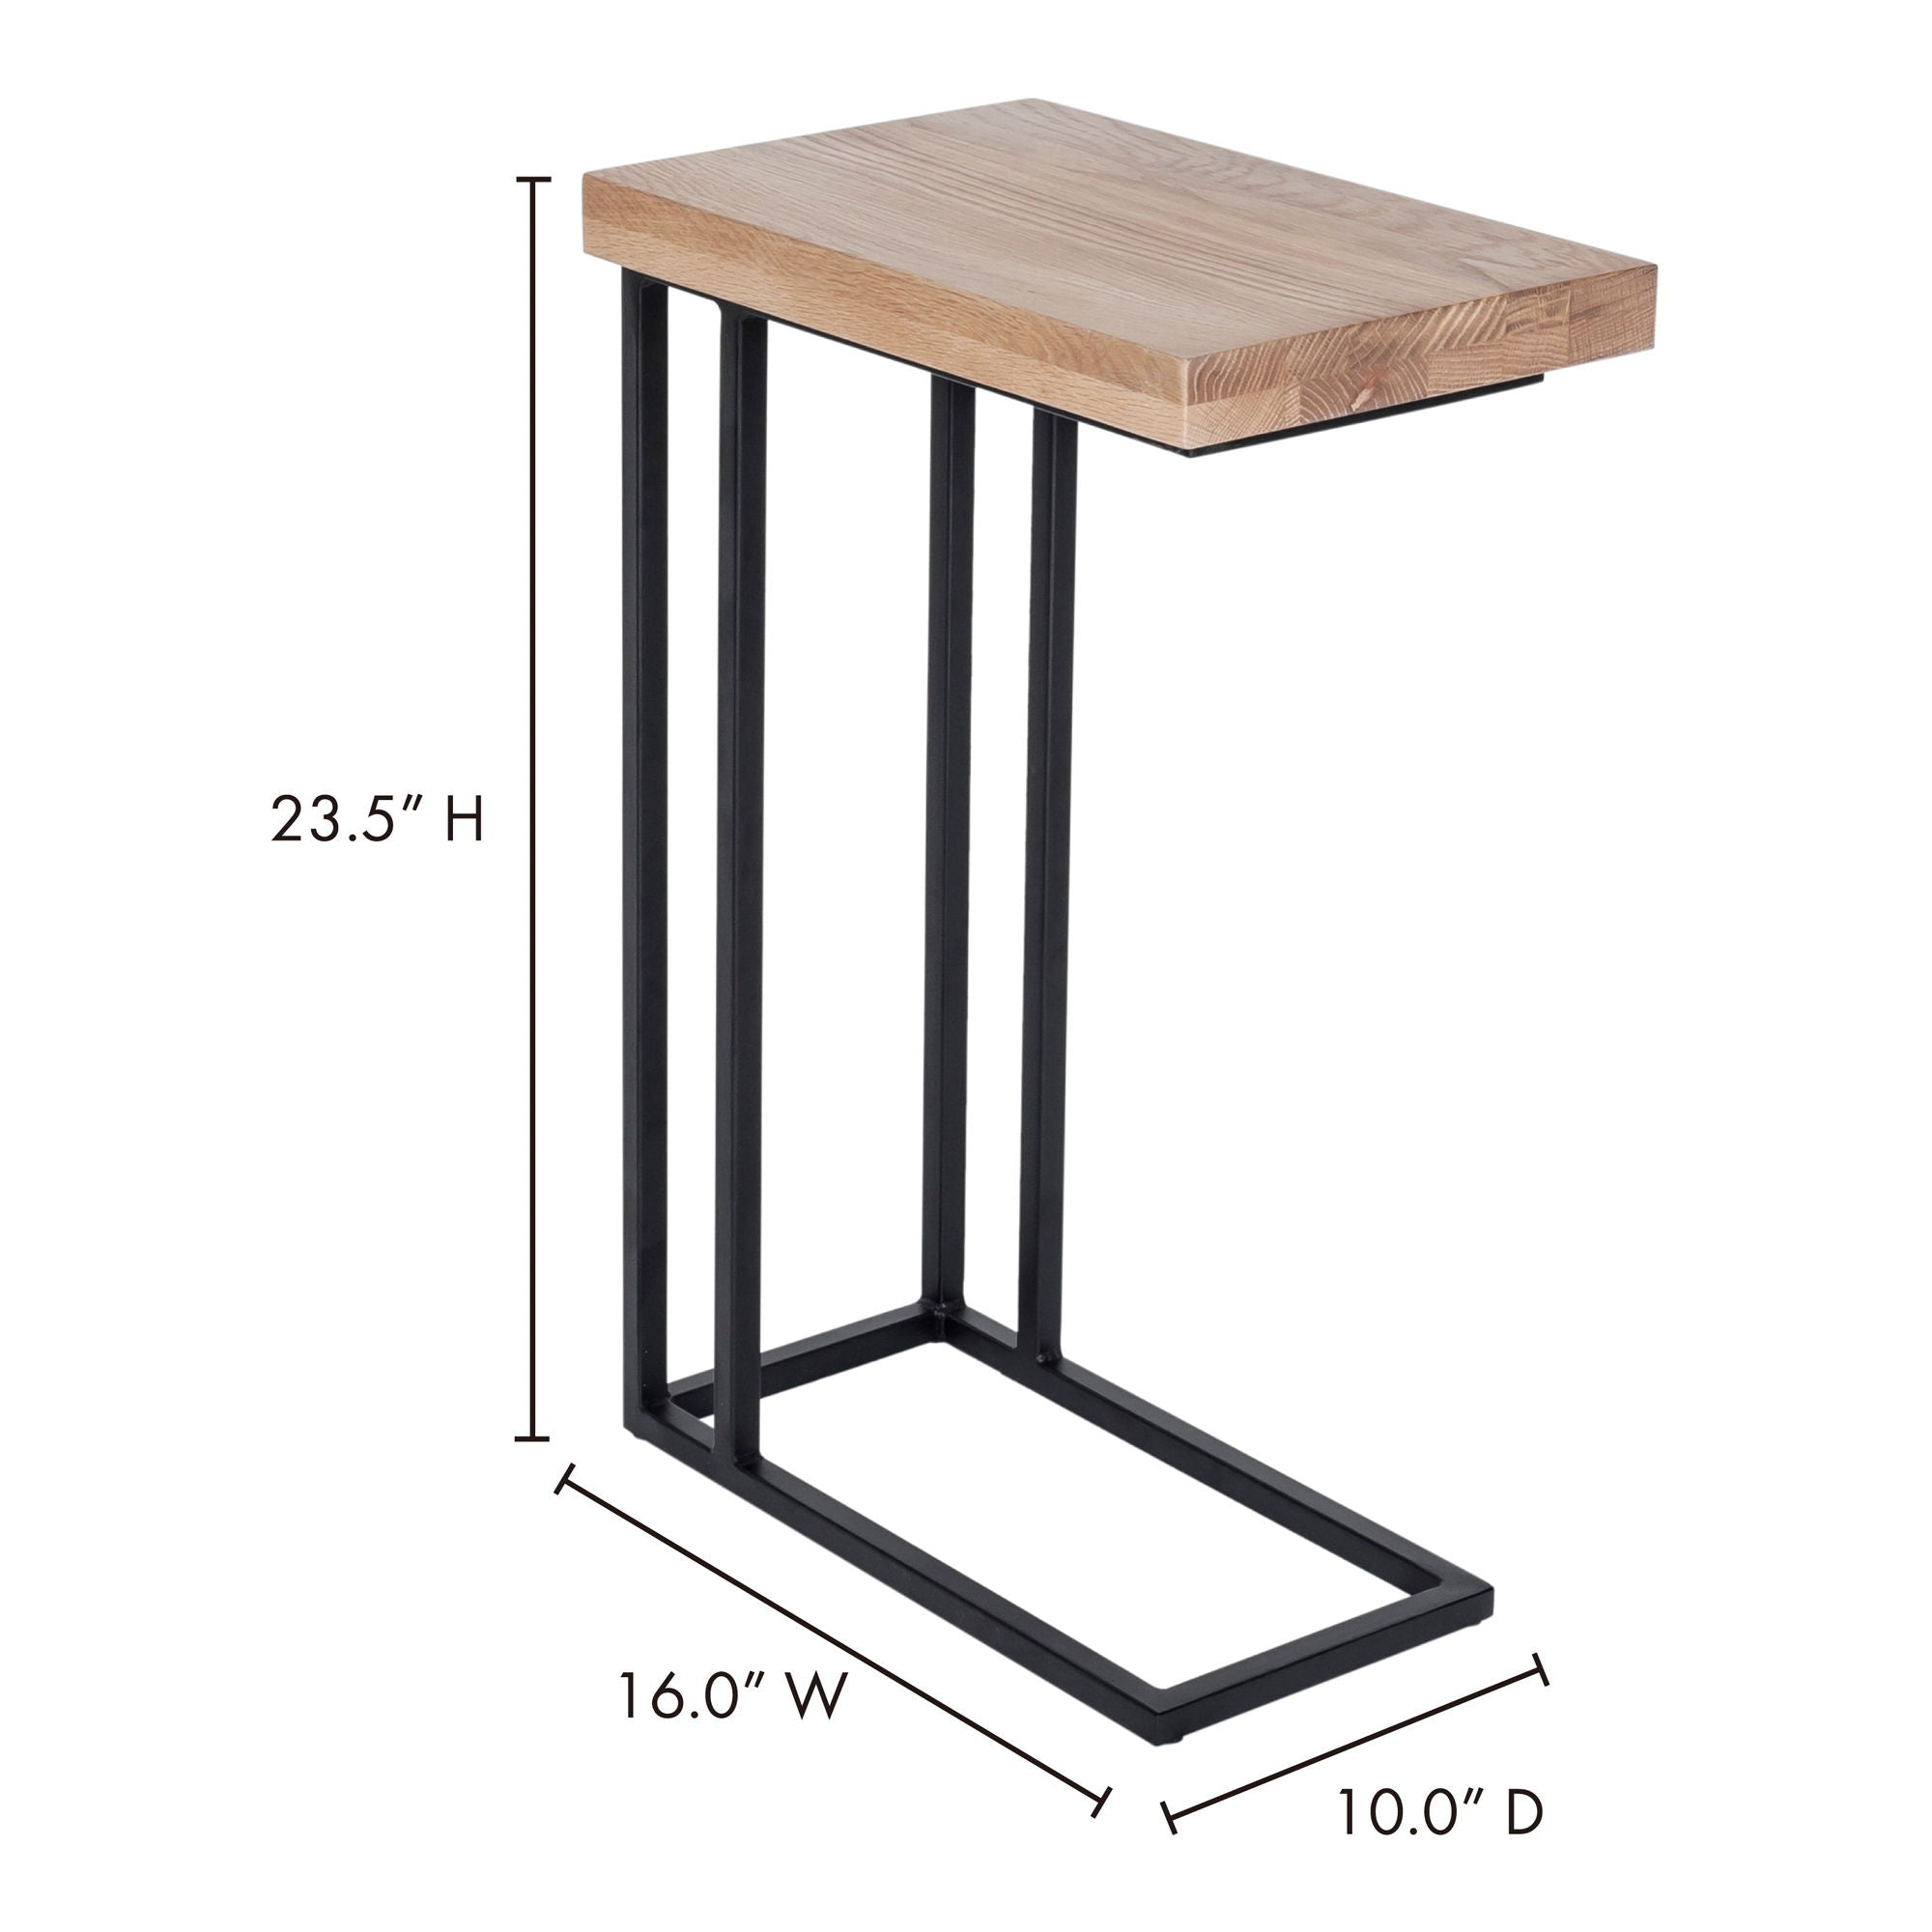 Mila - C Shape Side Table - Natural